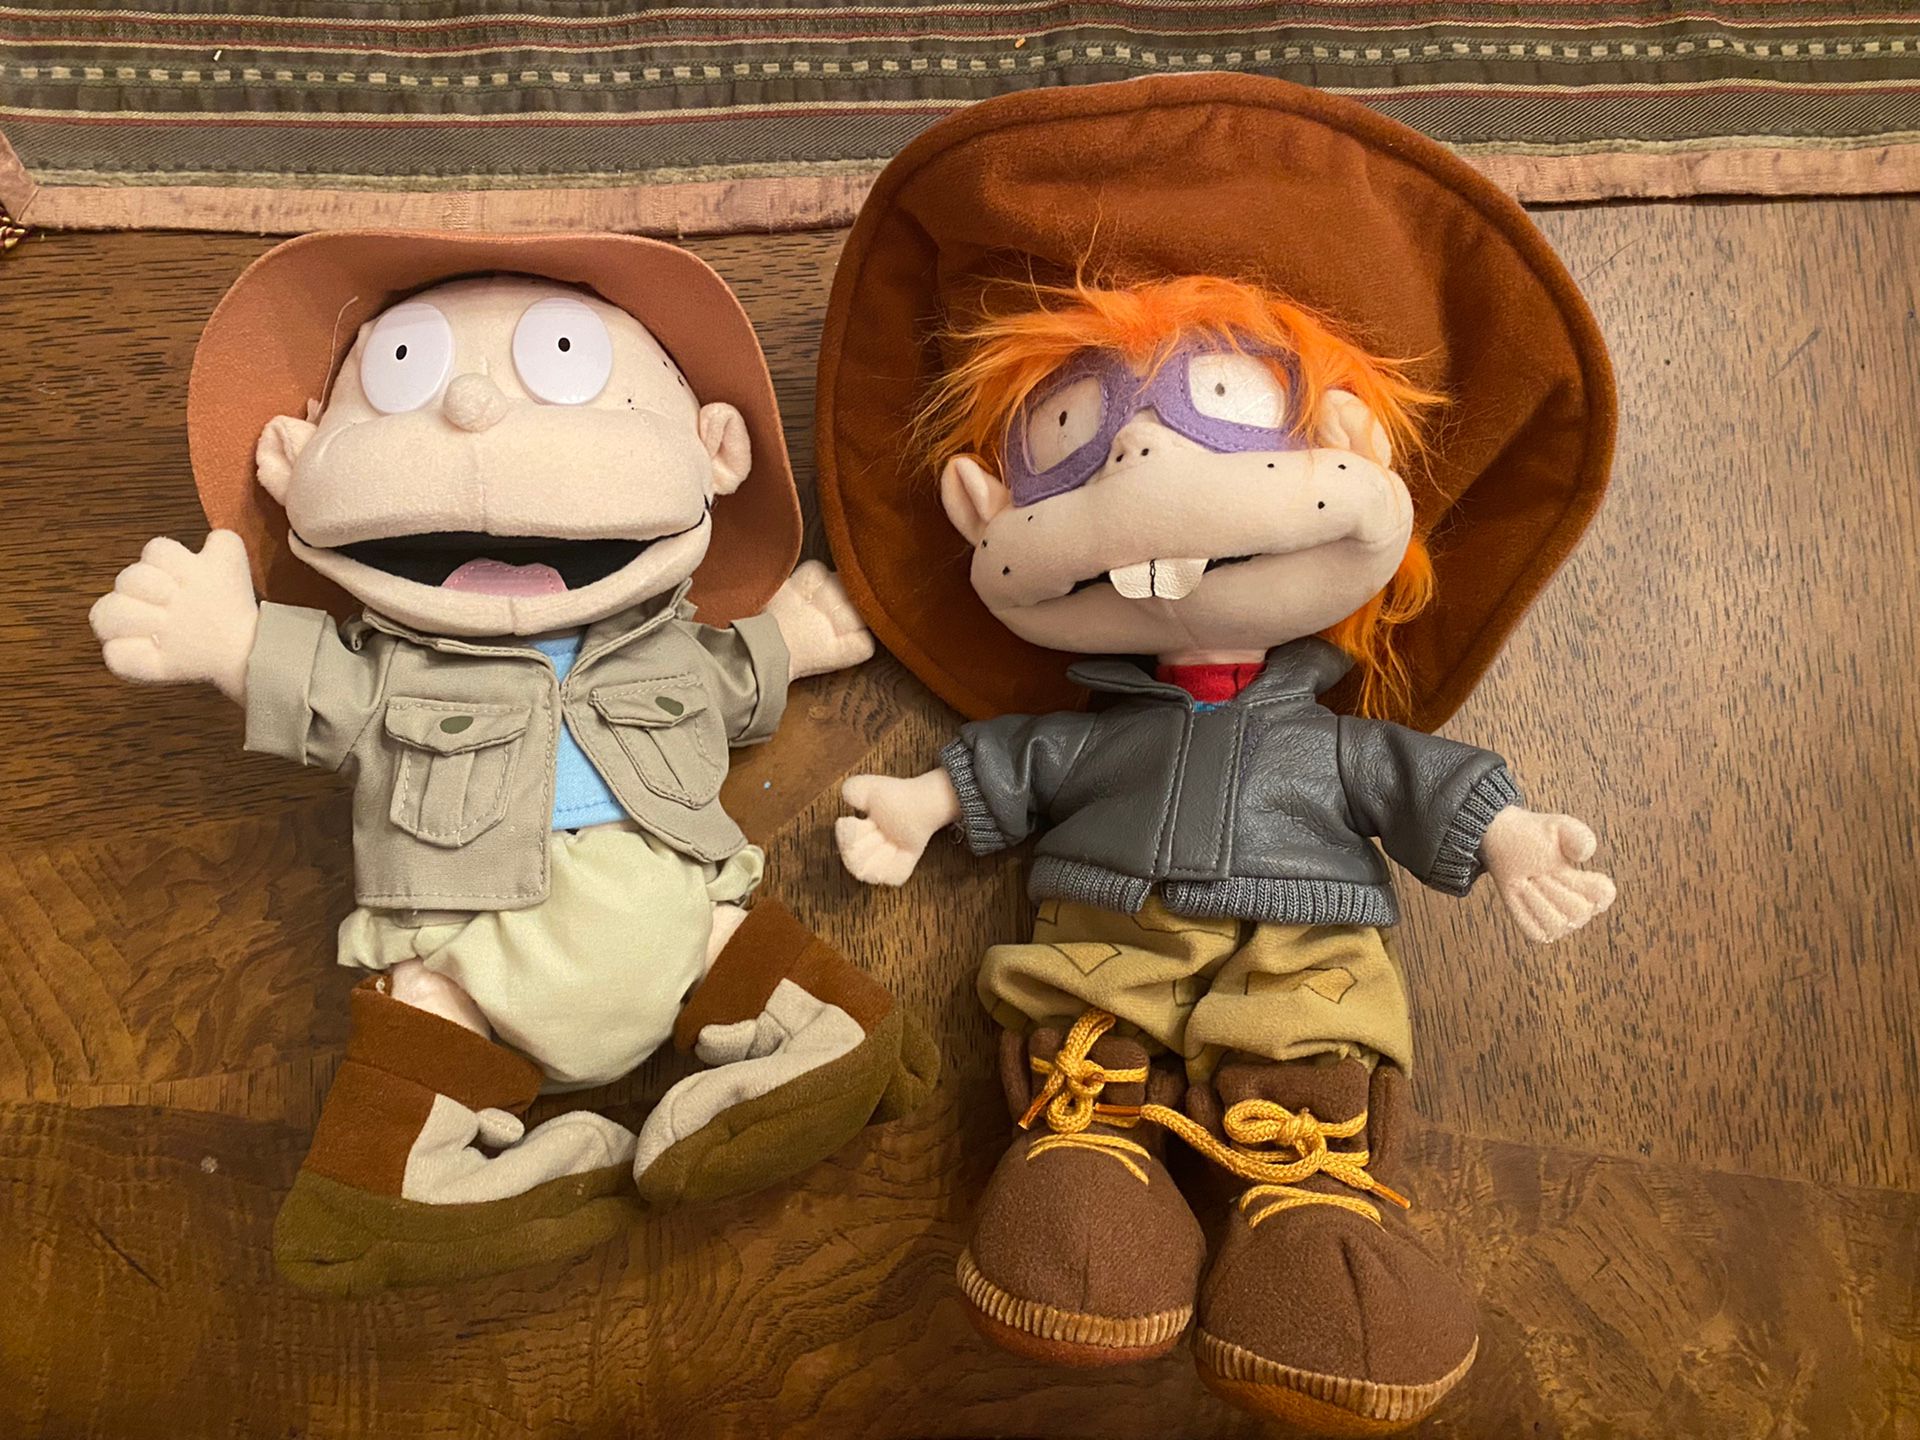 Rugrats Tommy Pickles Safari Doll 9” & Chuckie Safari Doll 11” Nickelodeon - $50